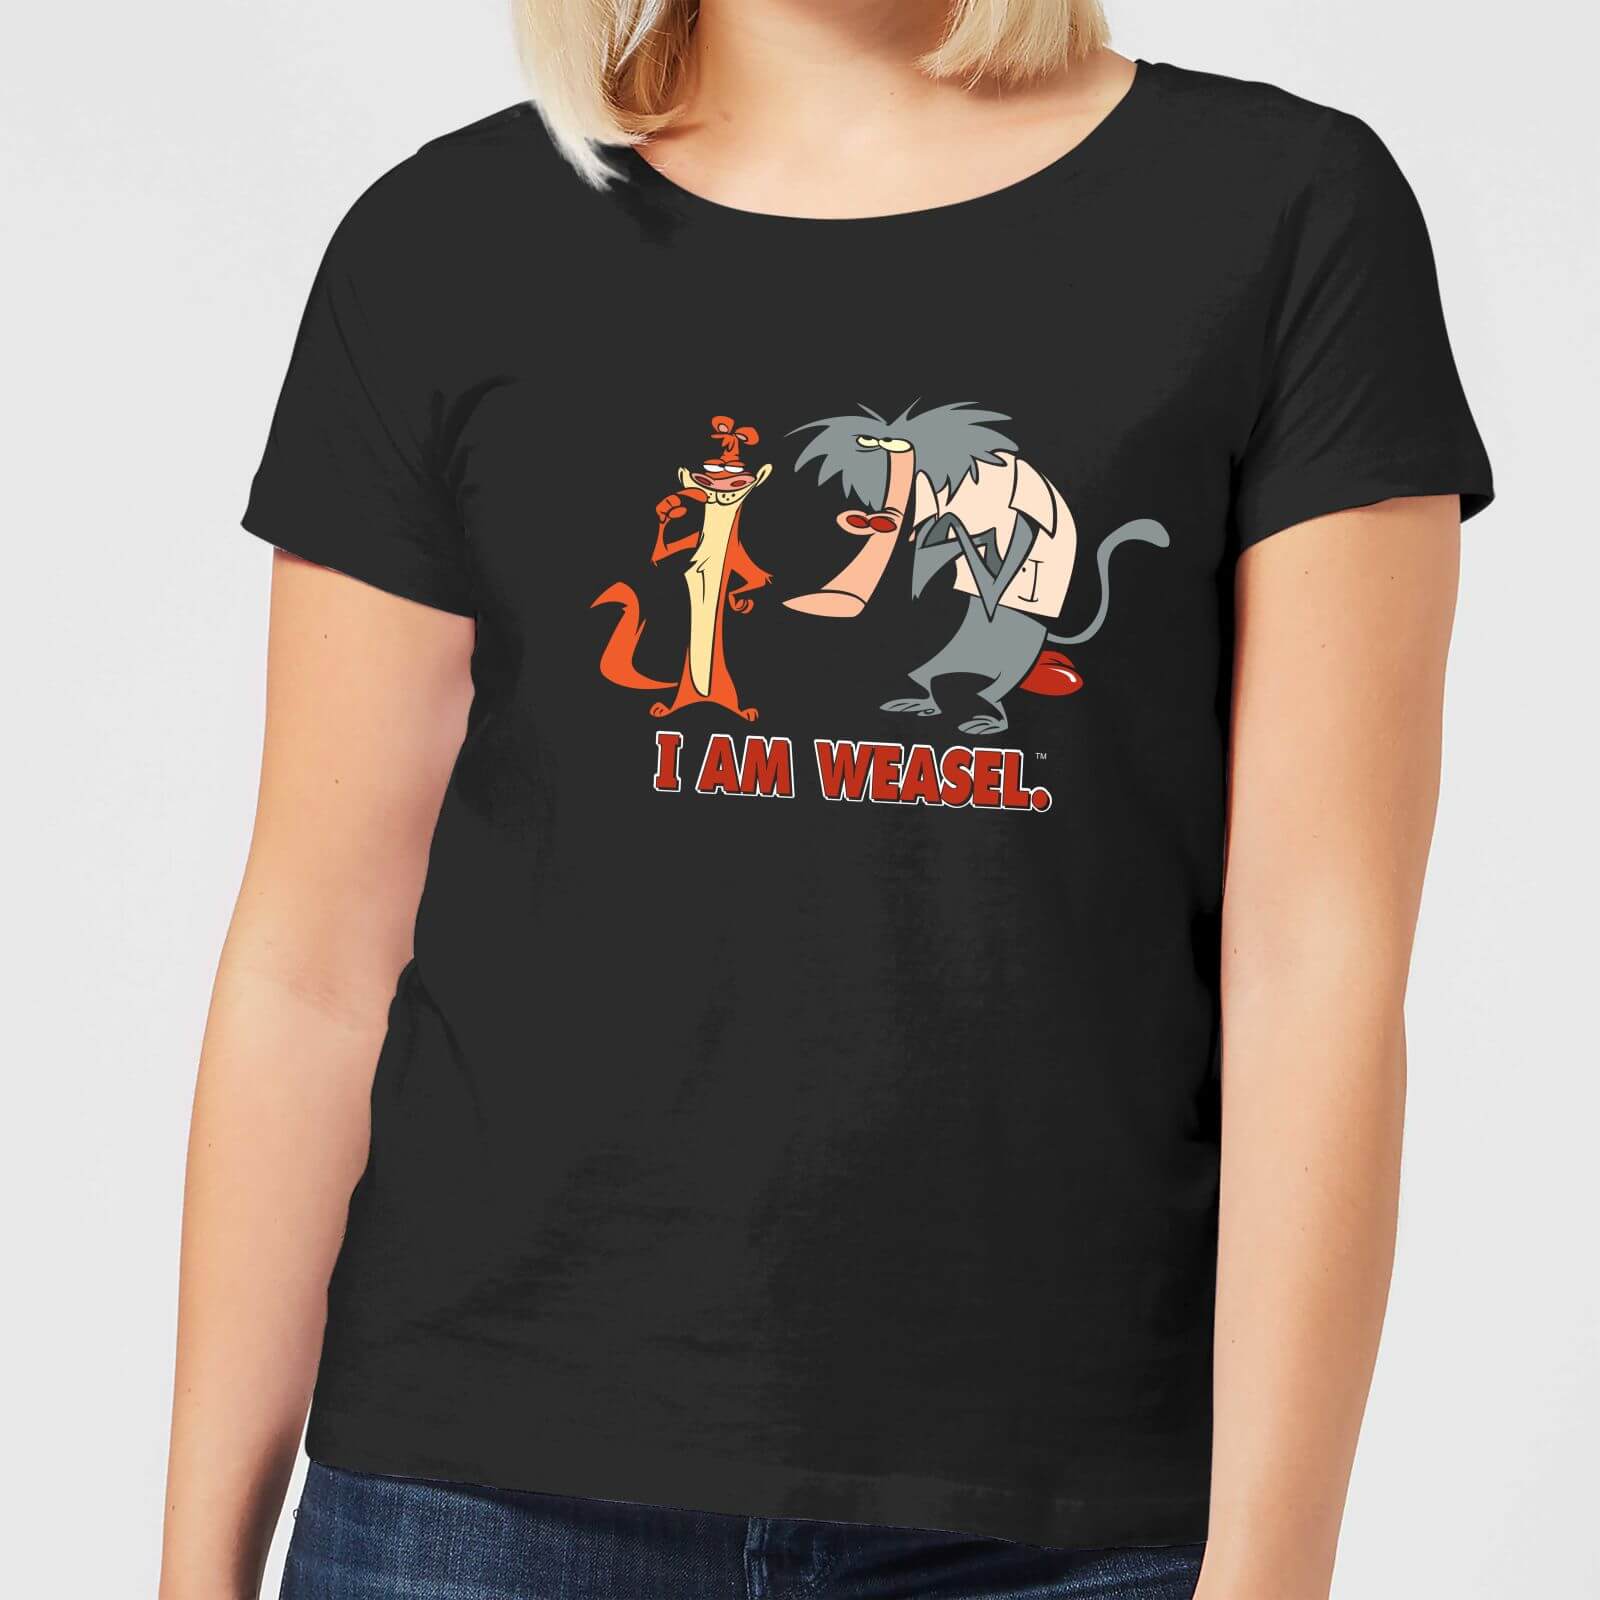 I Am Weasel Characters Women's T-Shirt - Black - S